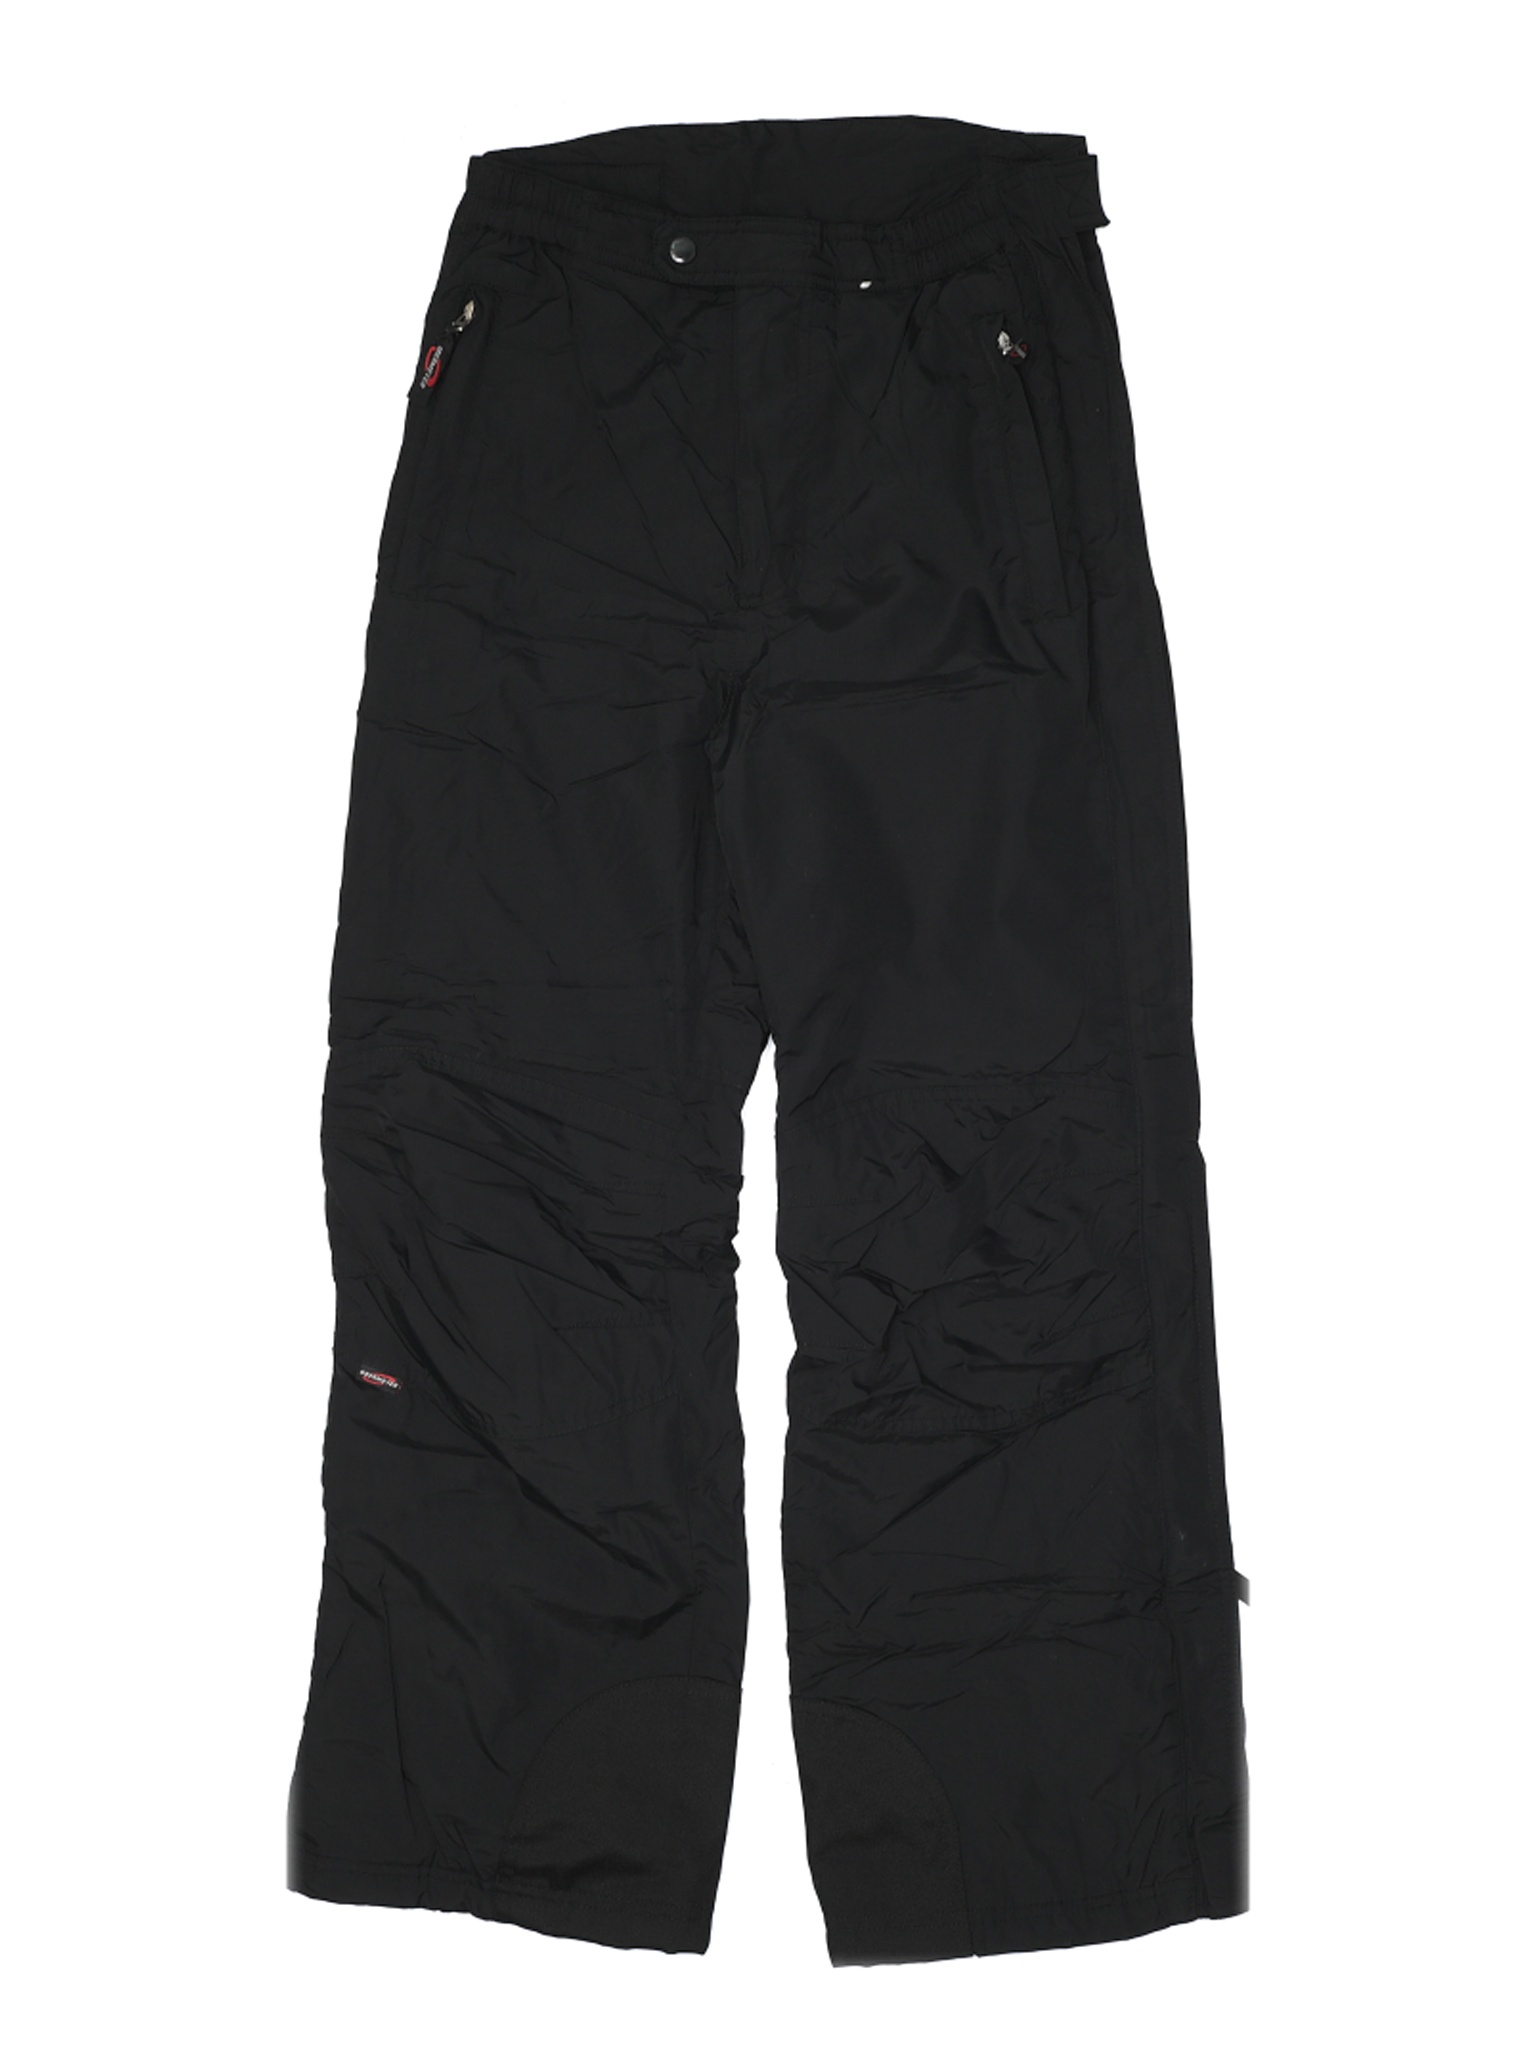 Obermeyer Boys Black Snow Pants 14 | eBay